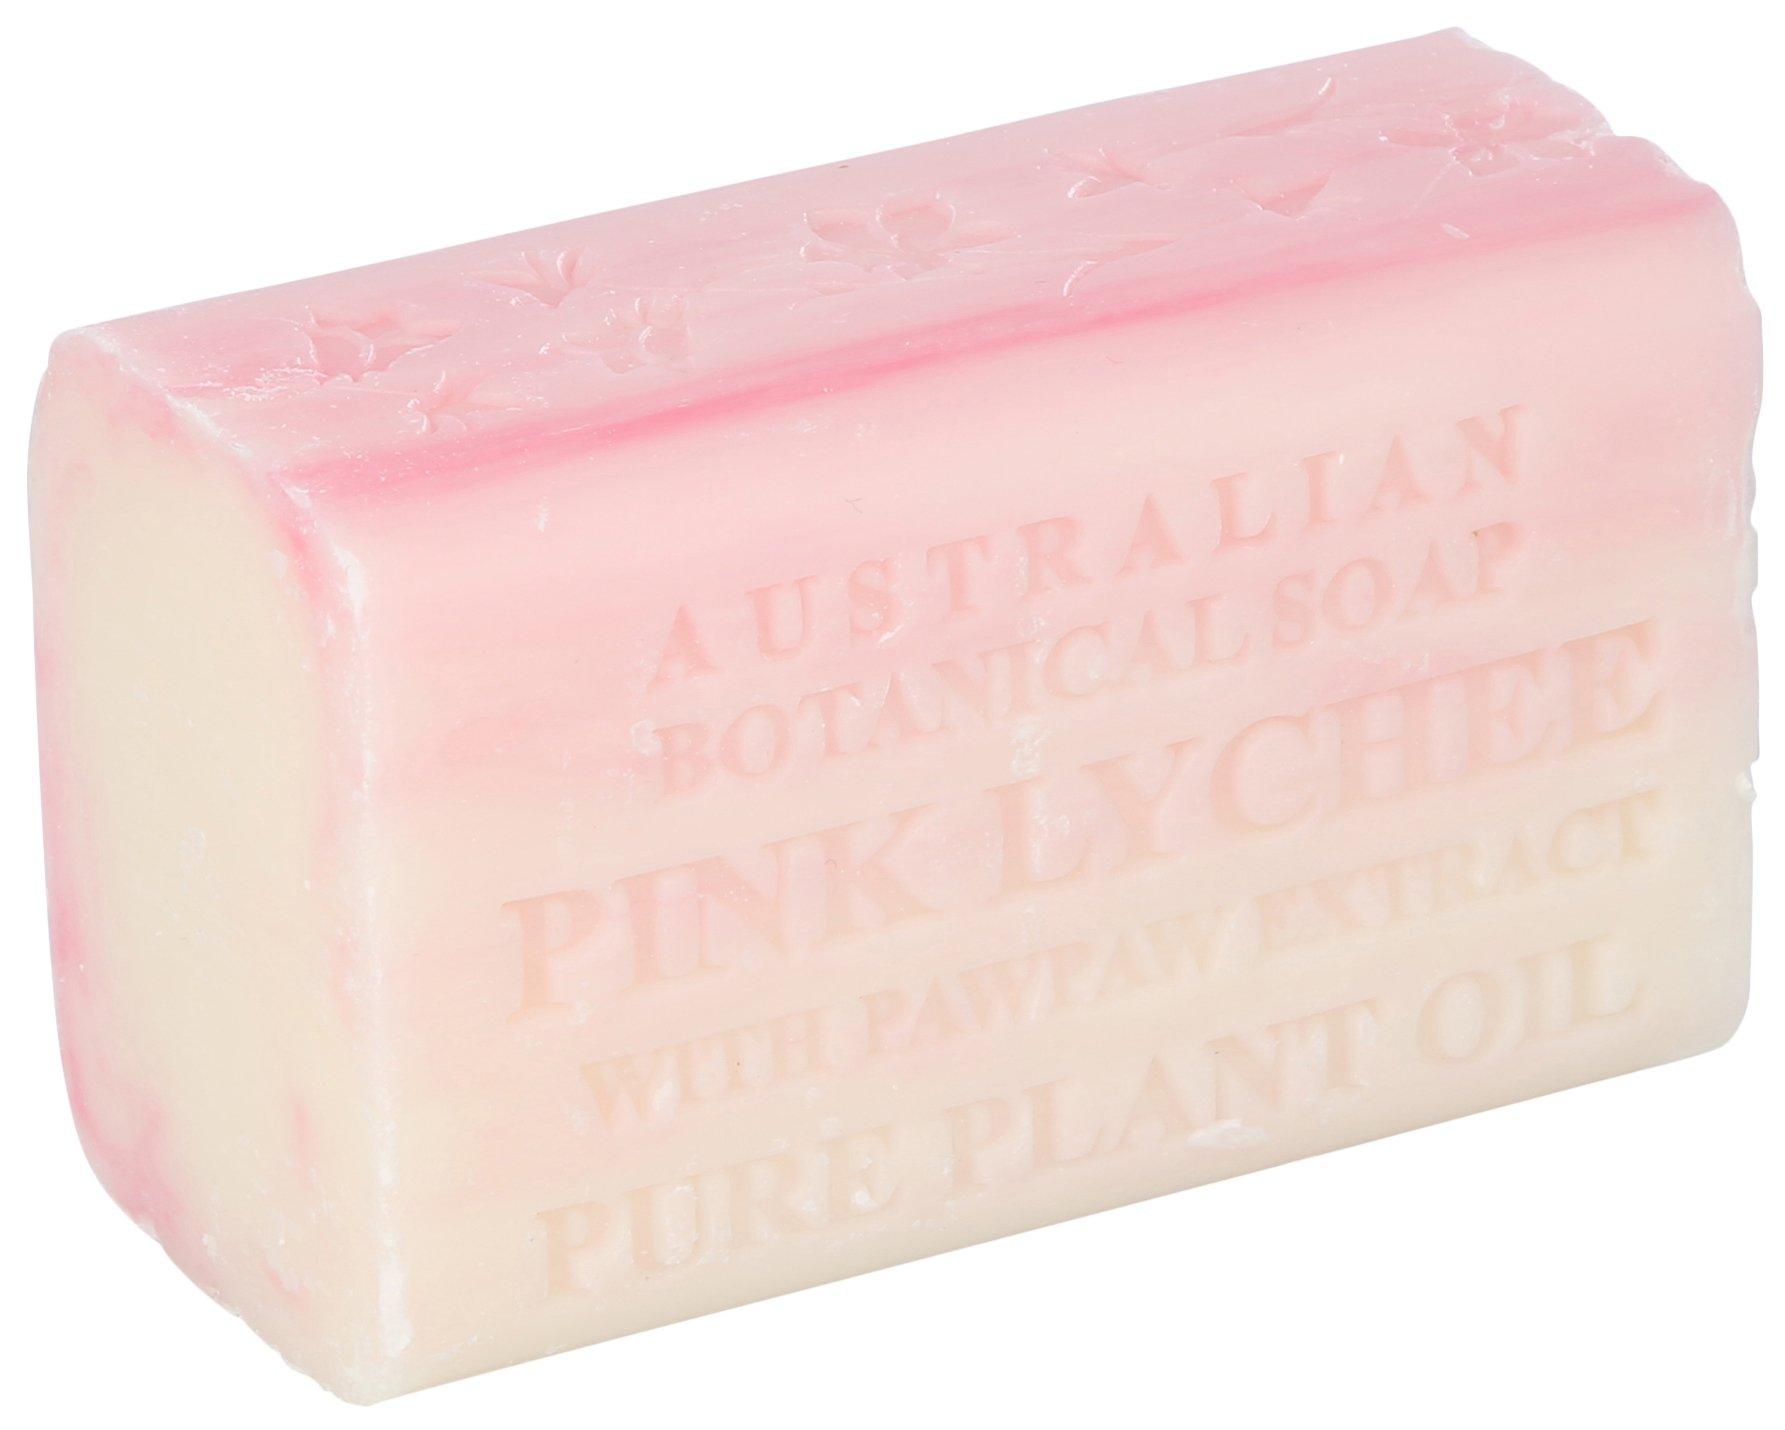 Australian Botanical 6.6 Oz. Pink Lychee Bar Soap